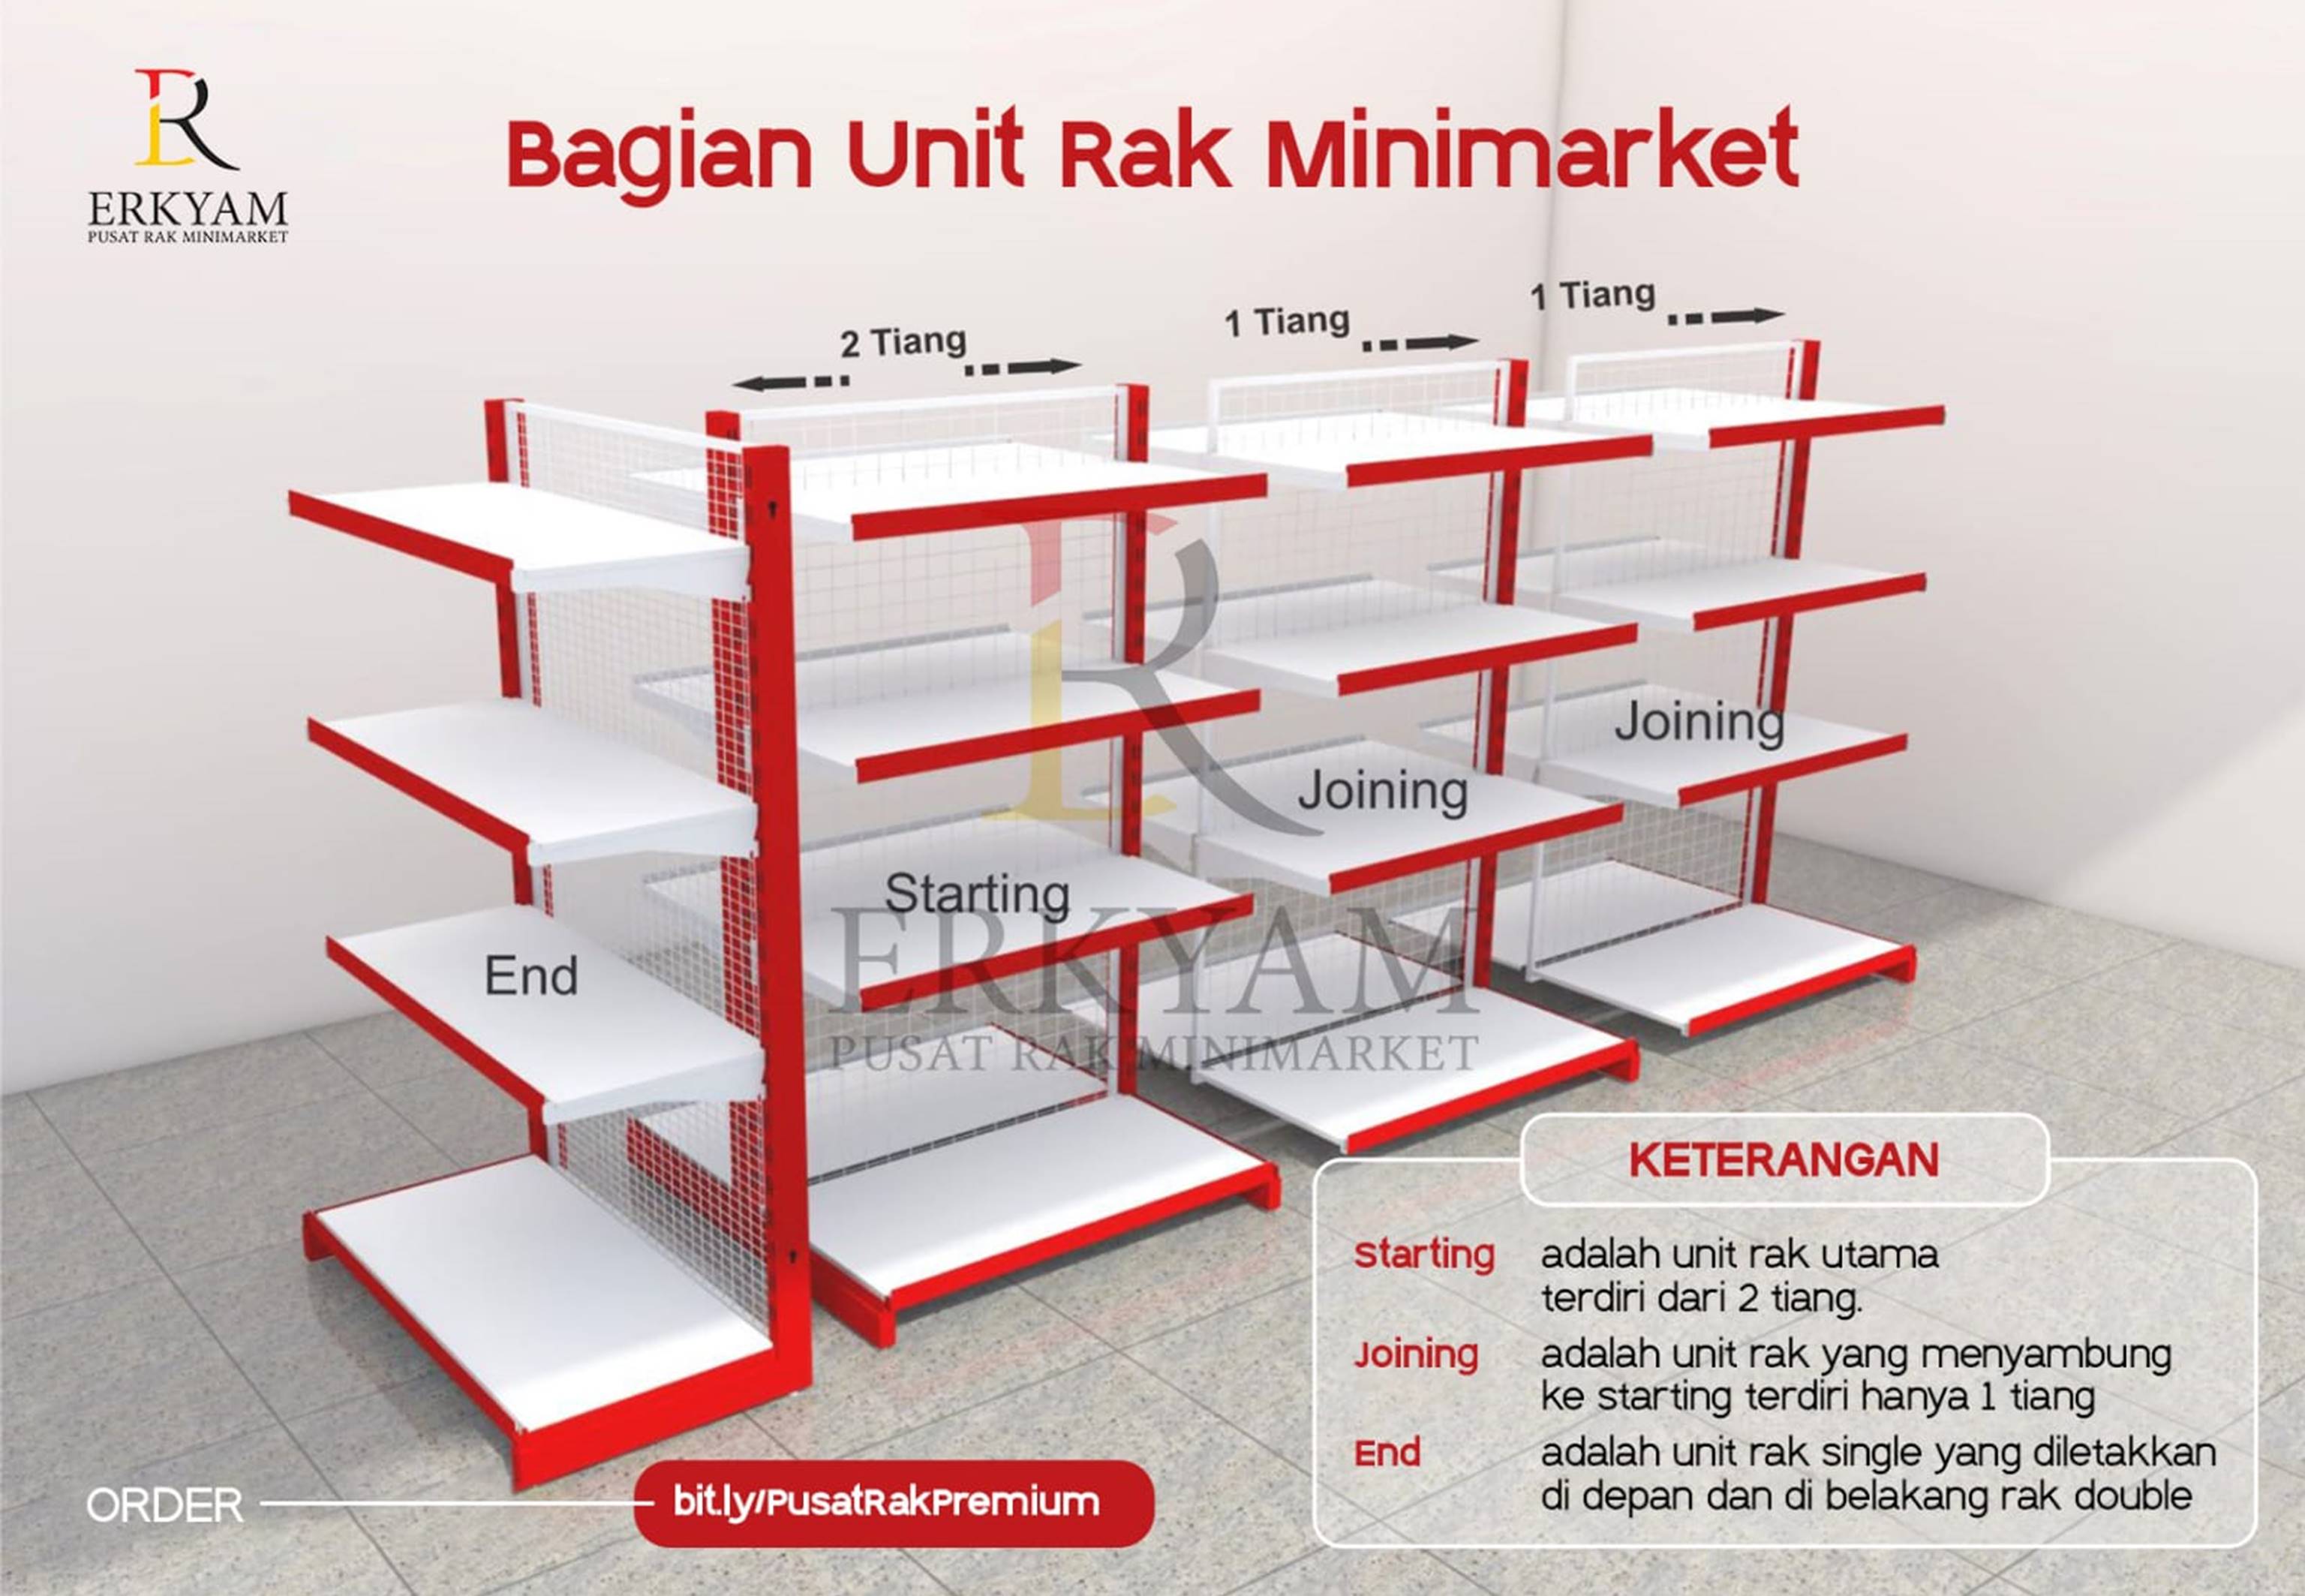 ERKYAM Distributor Rak Minimarket area Lamandau Kalimantan Tengah